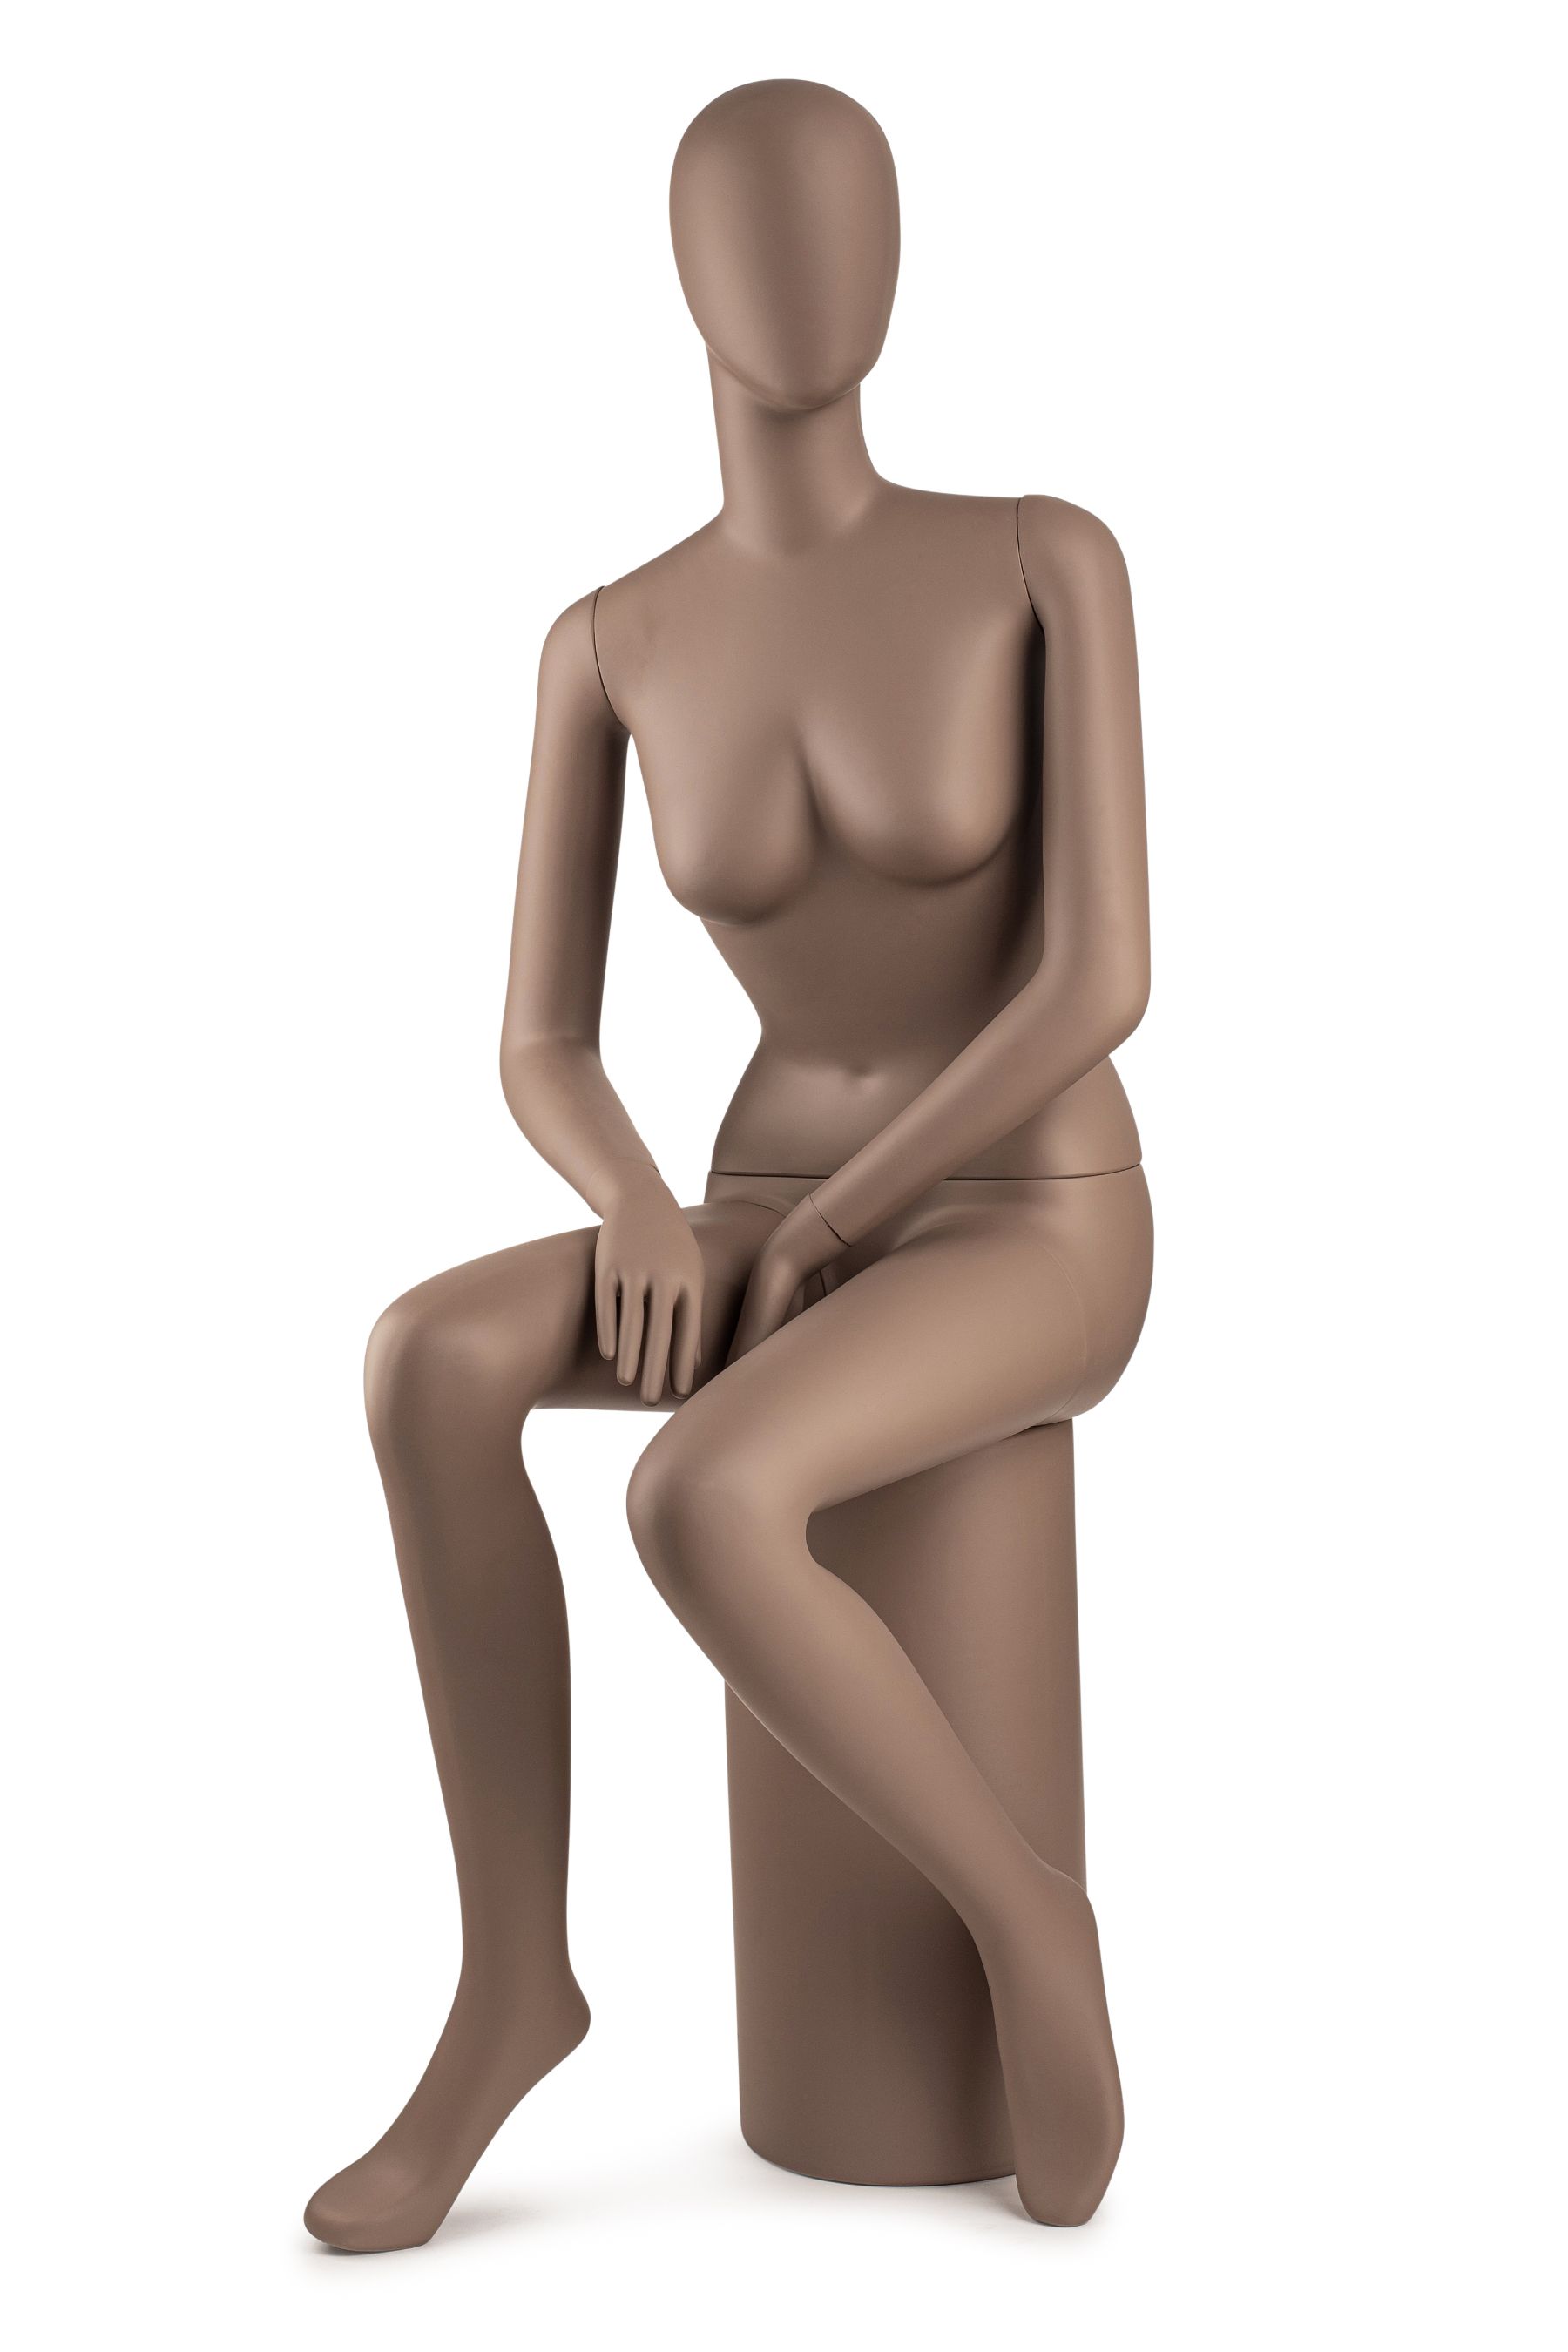 Female Full Body Mannequin in Sitting Pose